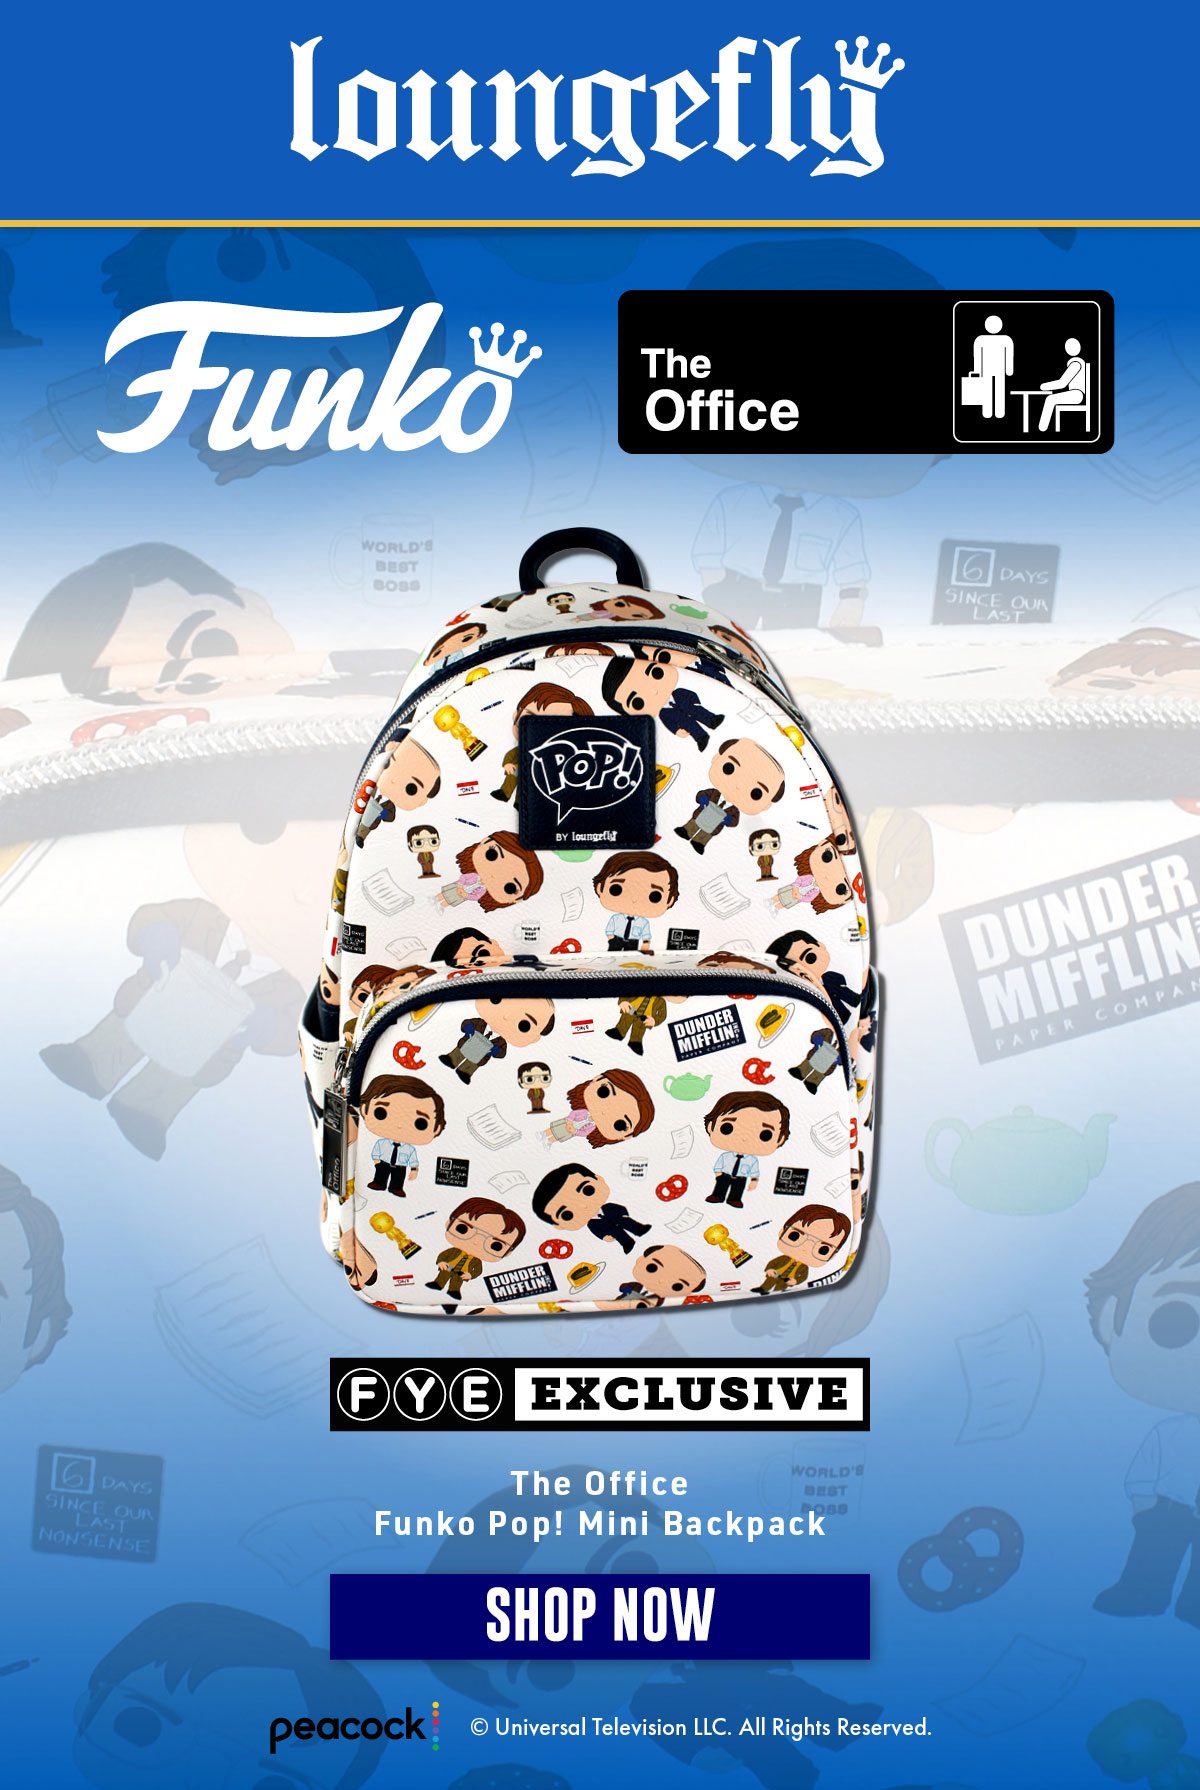 The Office Funko Pop! Mini Backpack